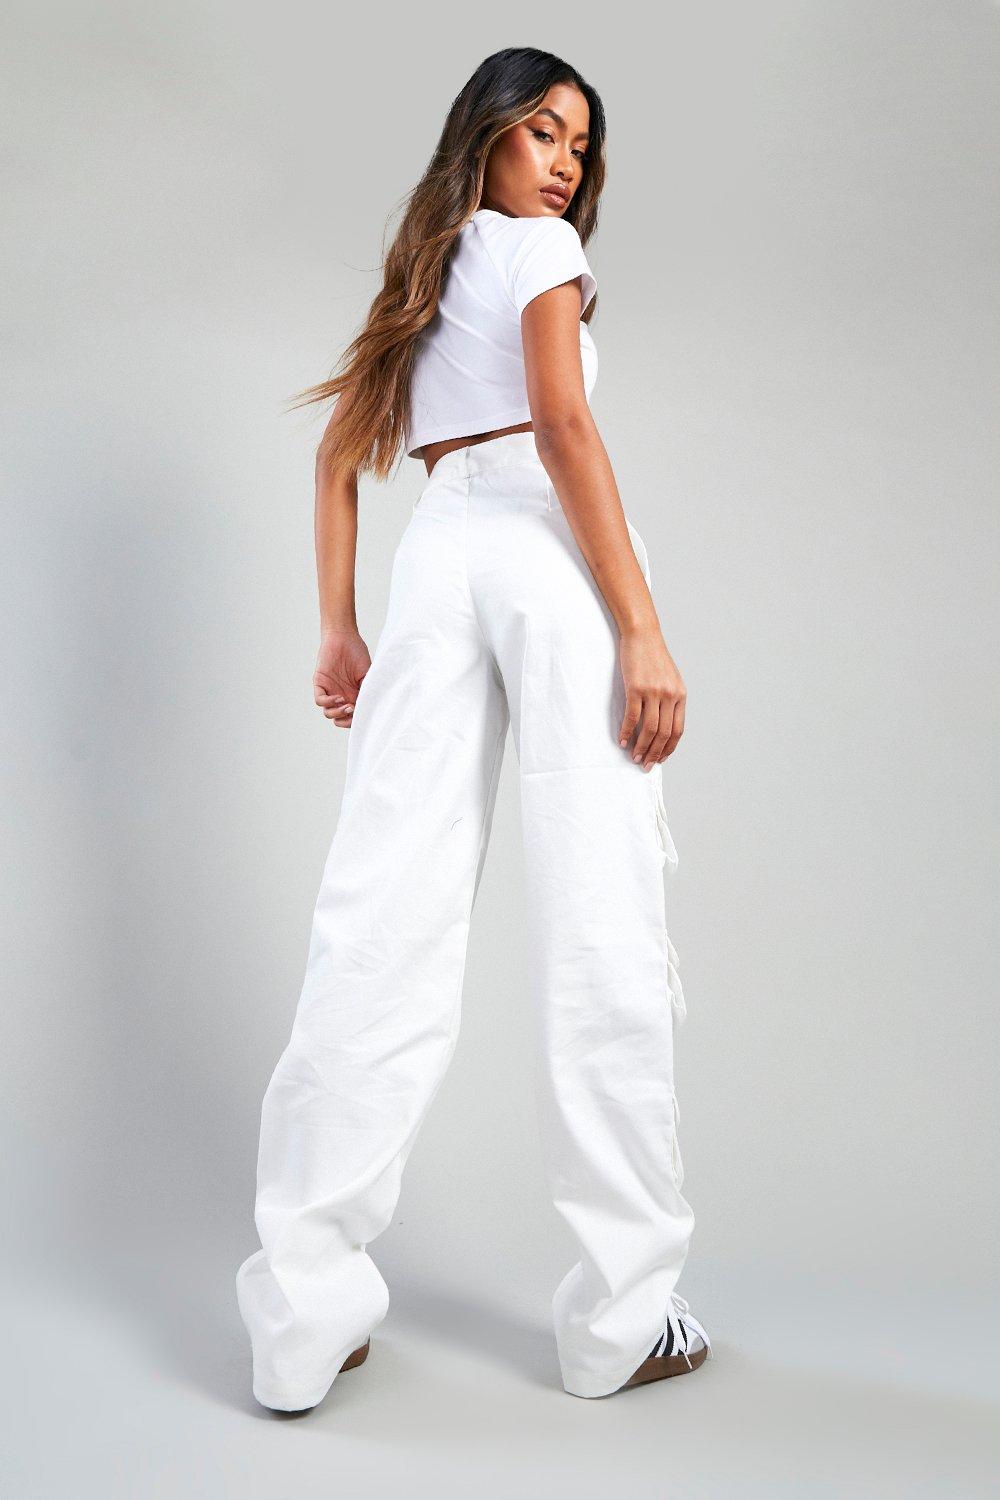 QIPOPIQ Pants for Women Wide Leg Street Pocket Elastic Low Waist Sports  Cargo Pants Trousers Clearance White M